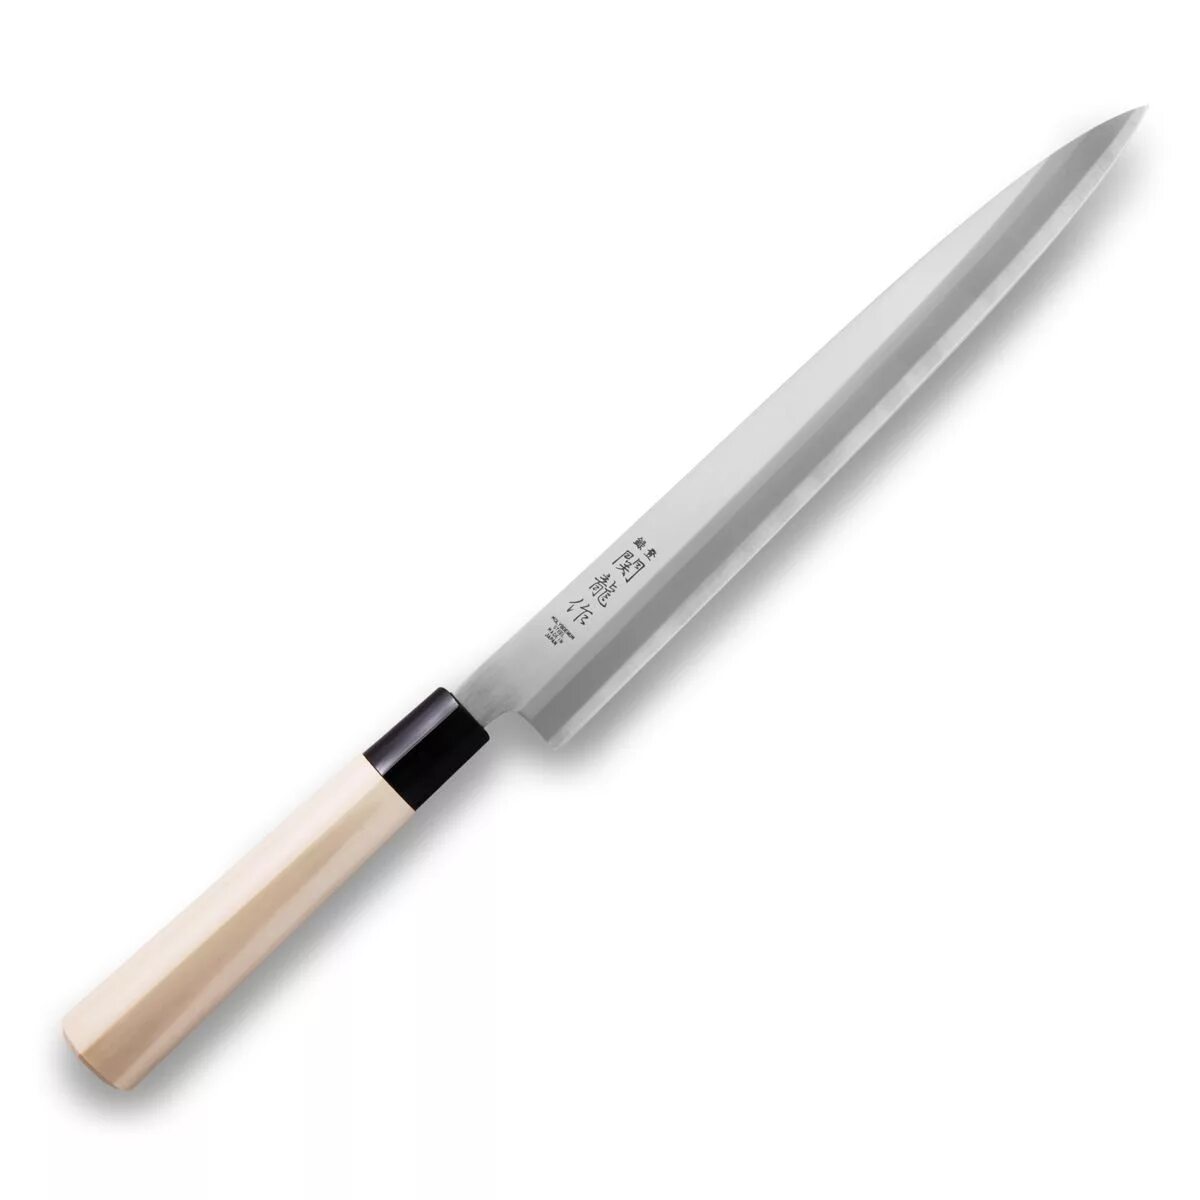 Янагибу нож. Нож Янагиба sr240/s. Японский нож Янагиба. Нож японский Янаги для сашими l=240. Нож Янагиба 300 мм.